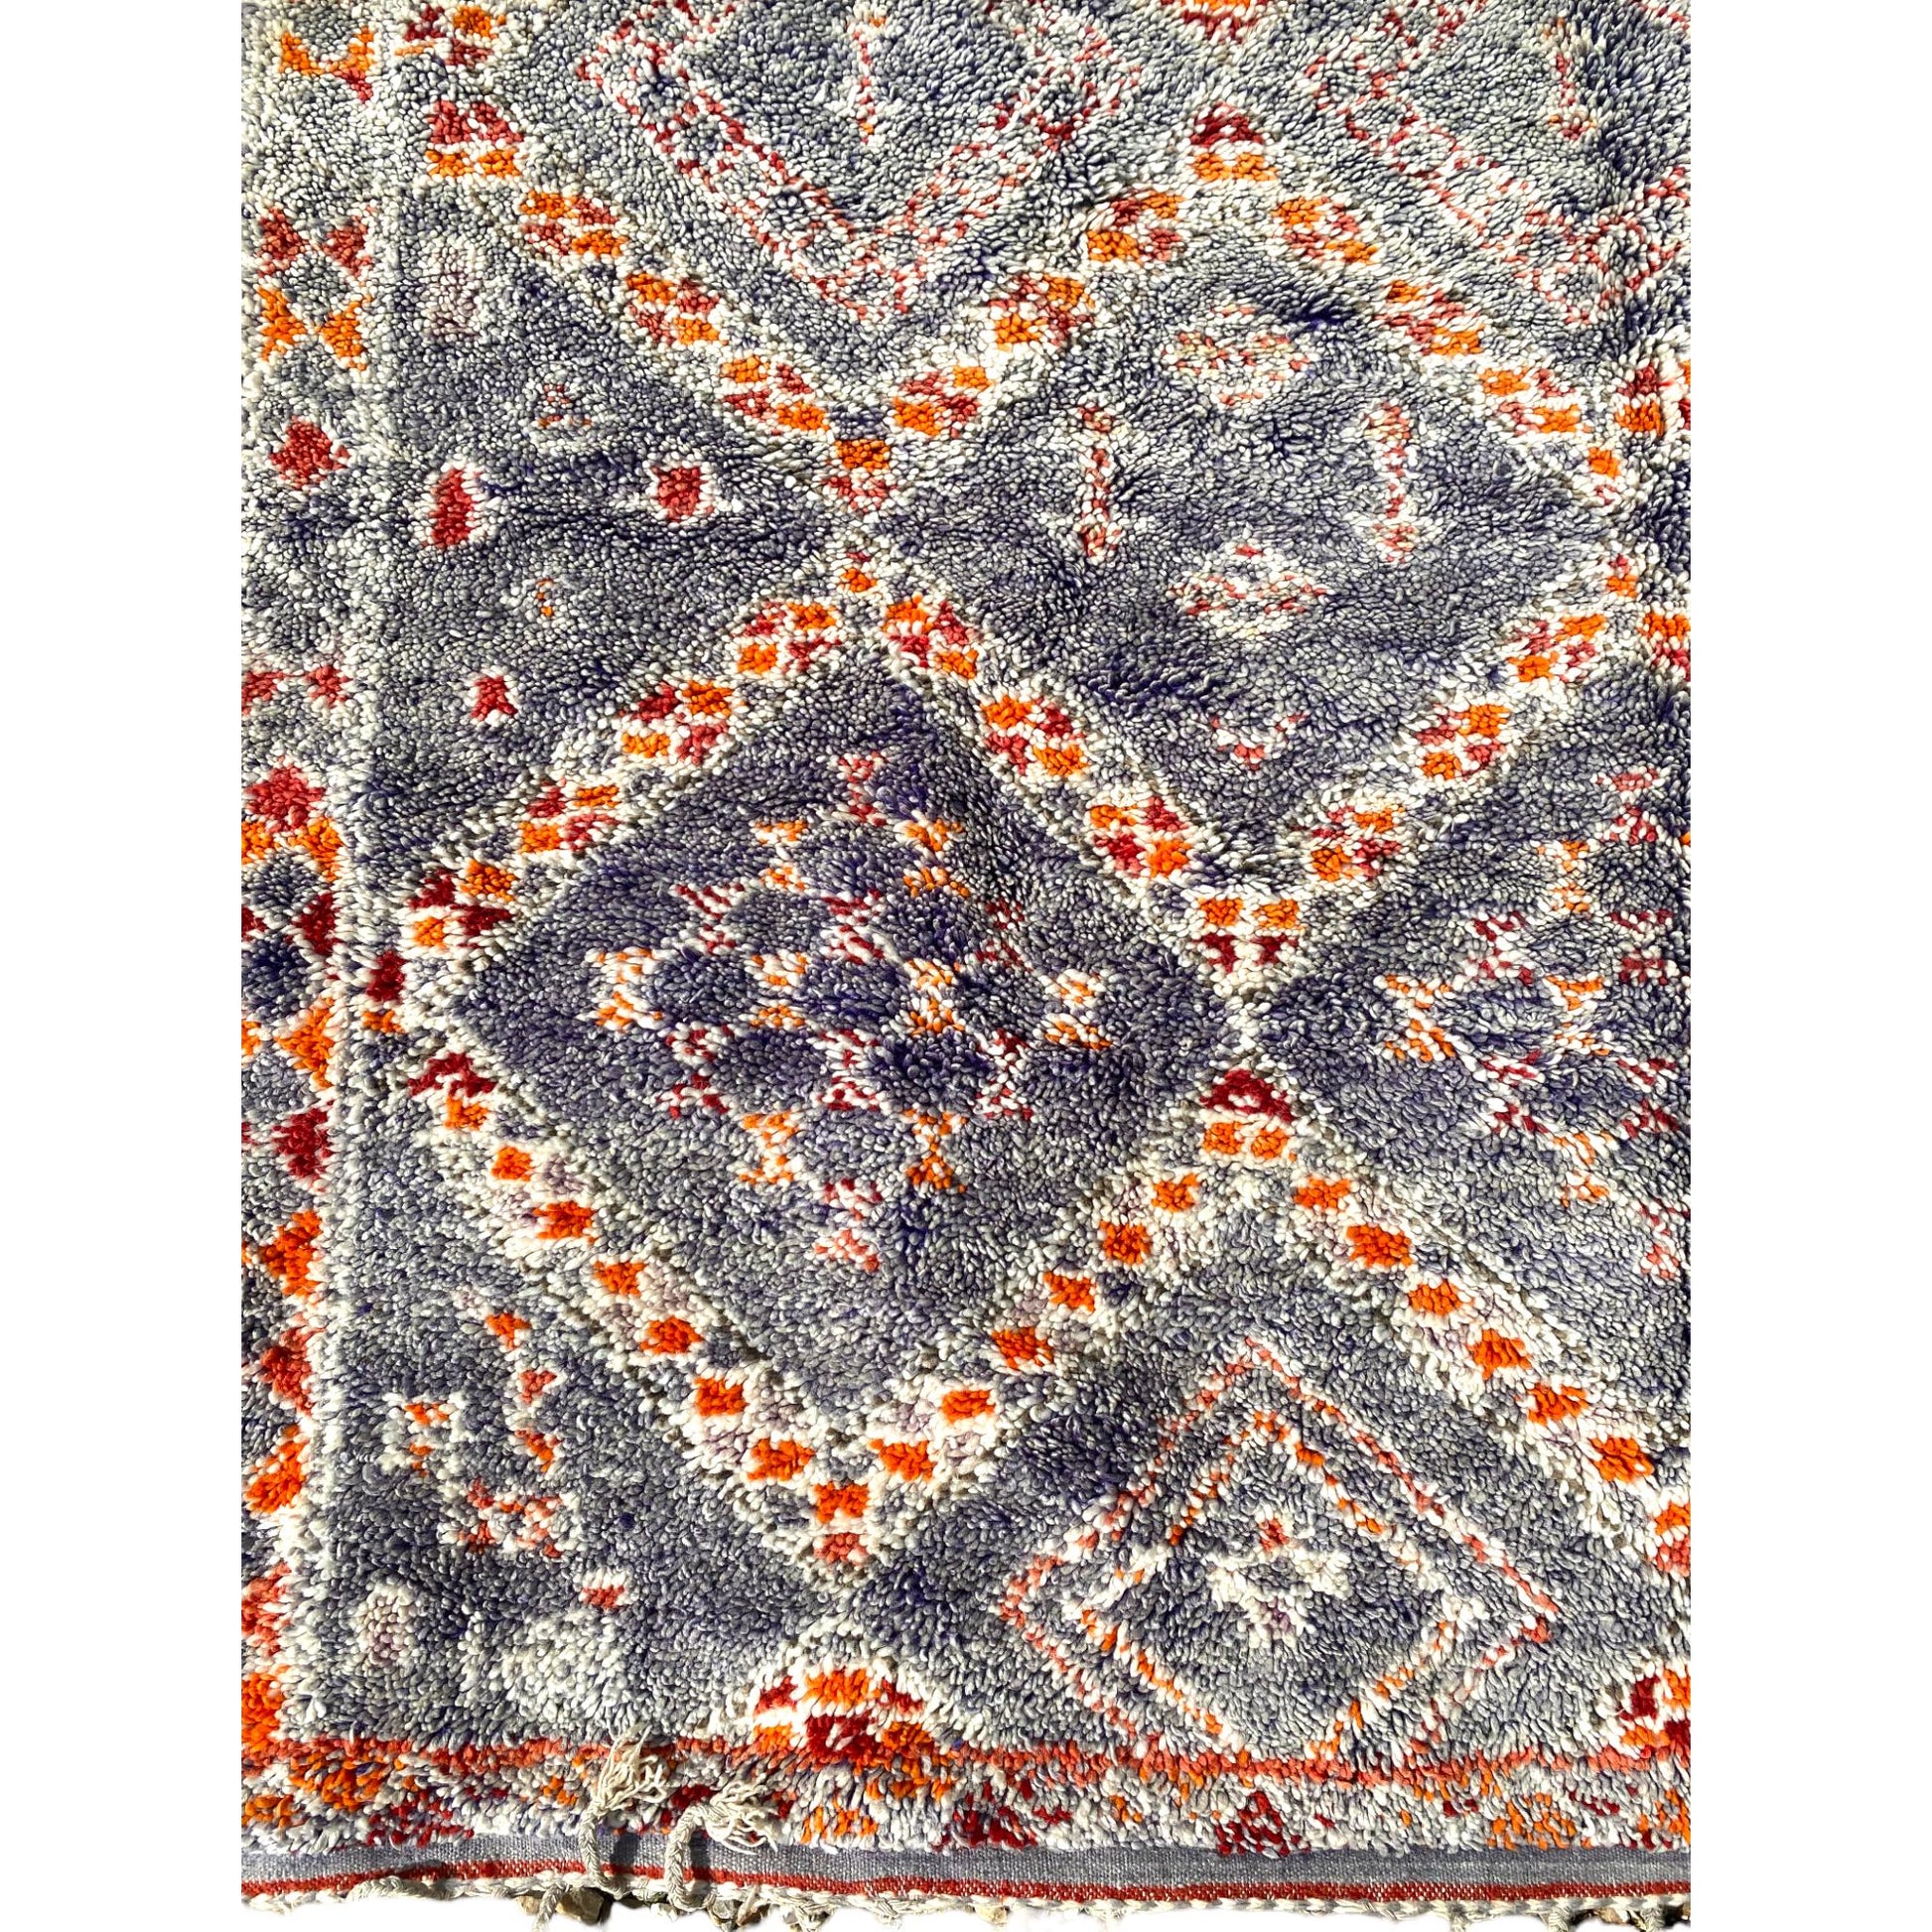 Beni Mguild rug close up